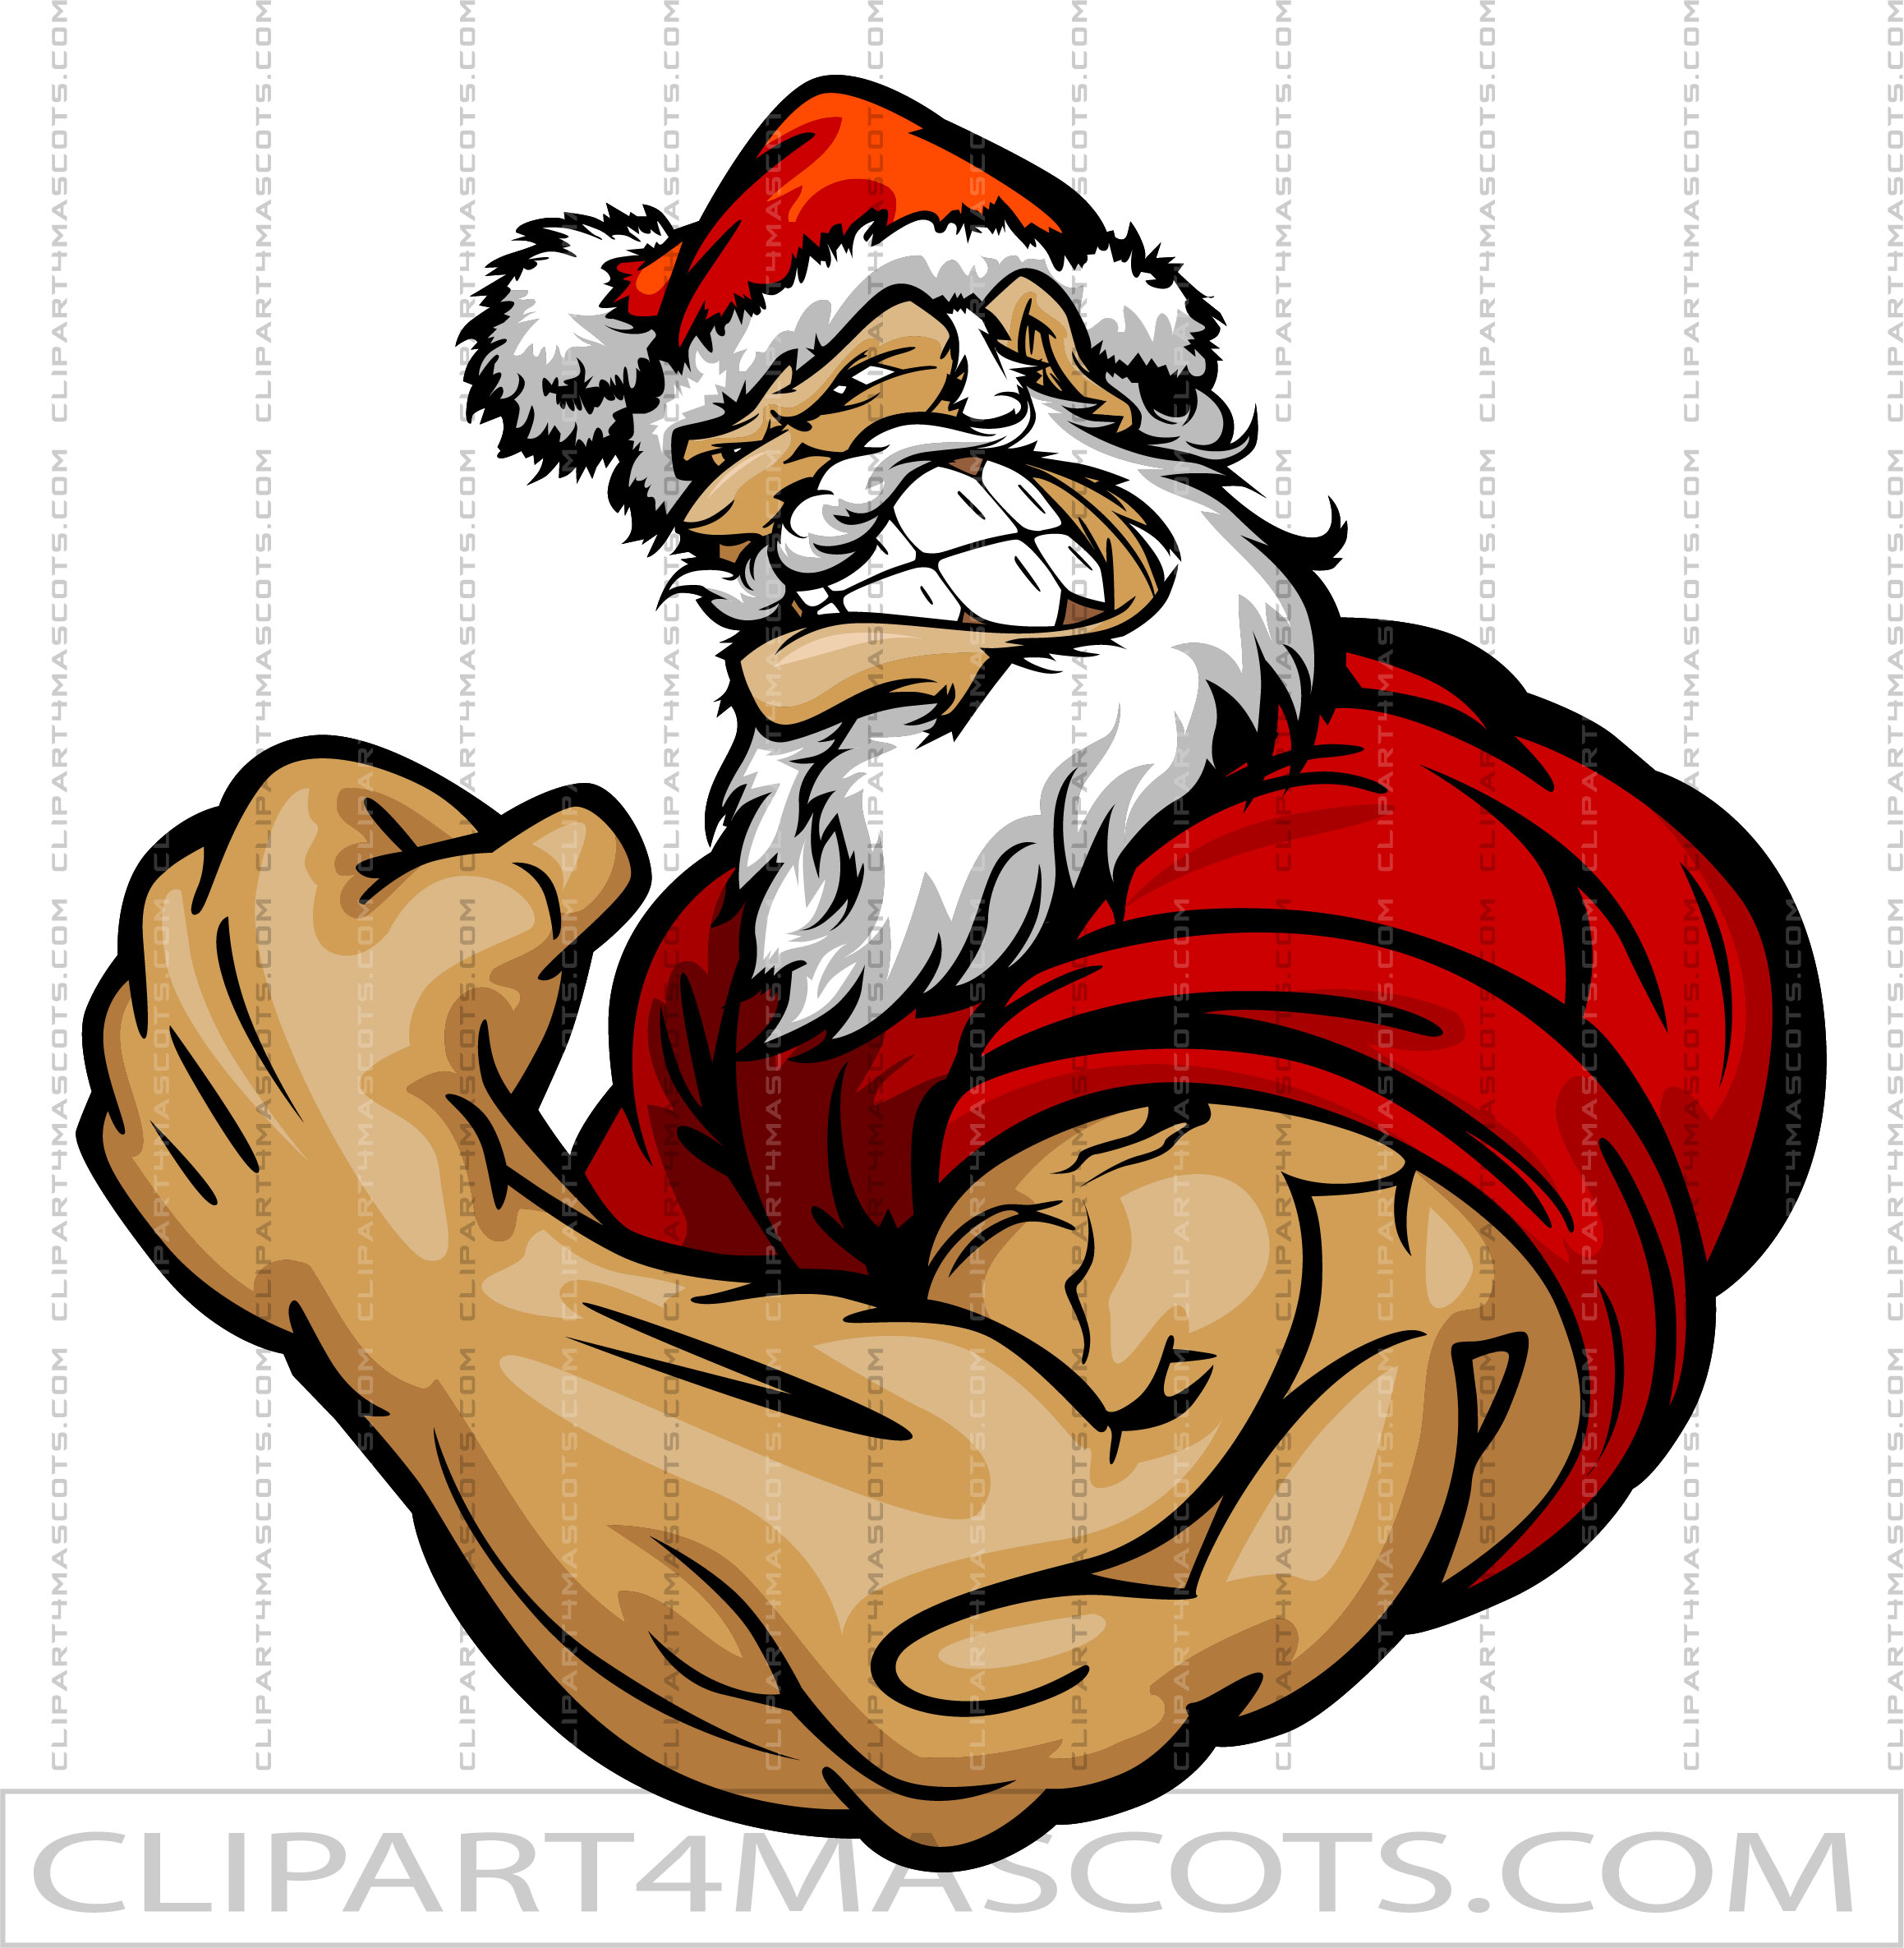 Muscular Santa Claus